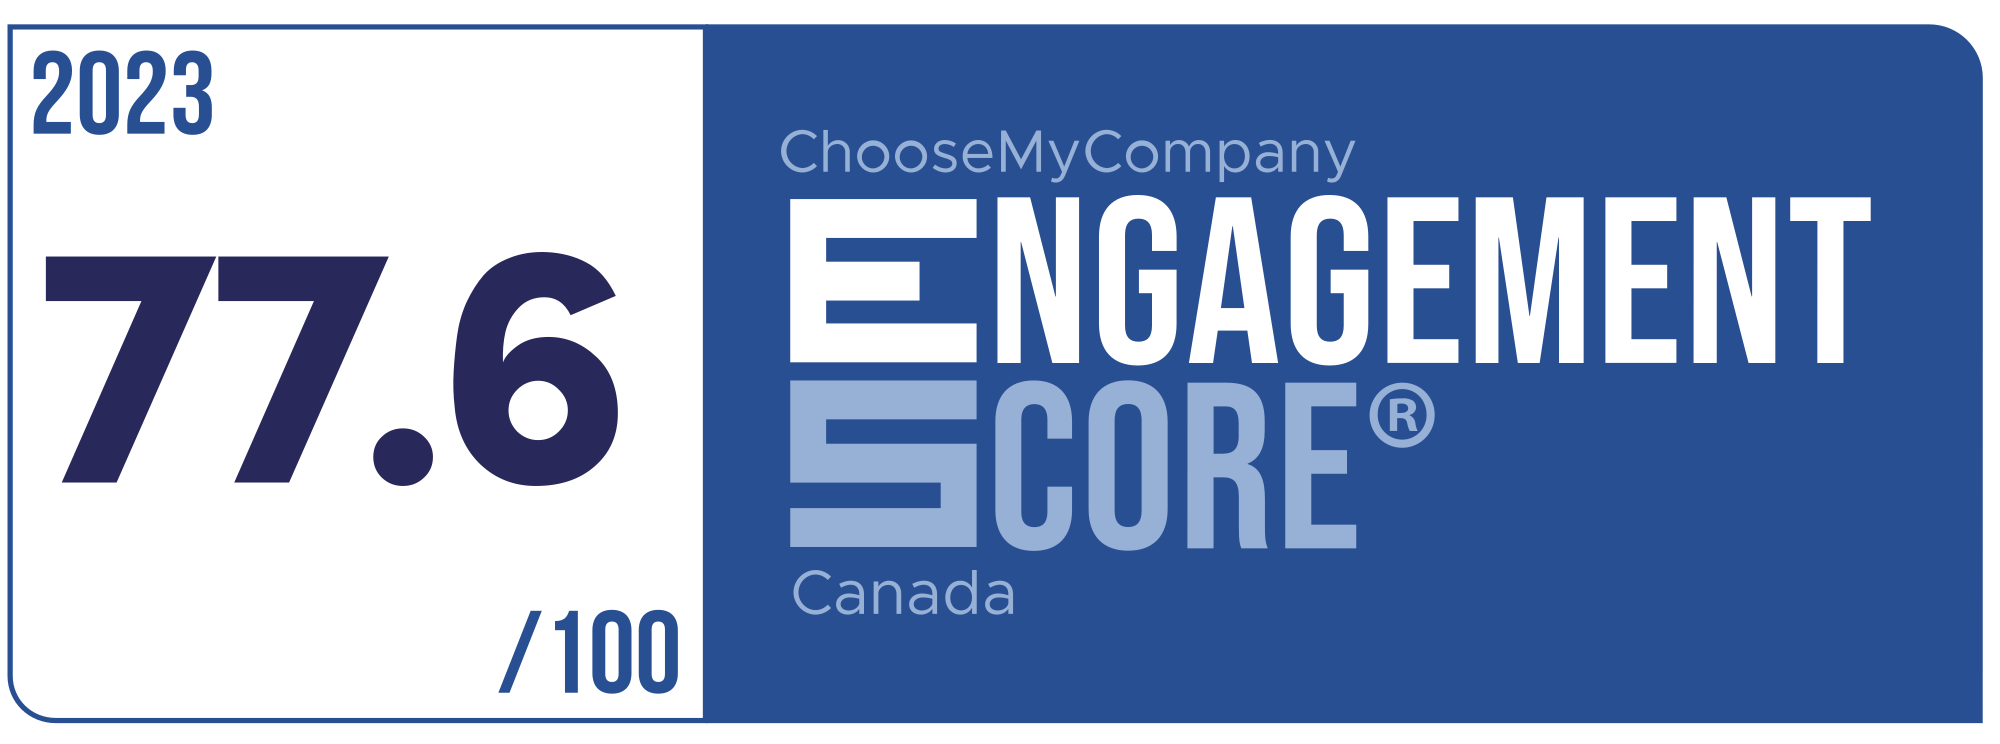 Label Engagement Score 2023 Canada